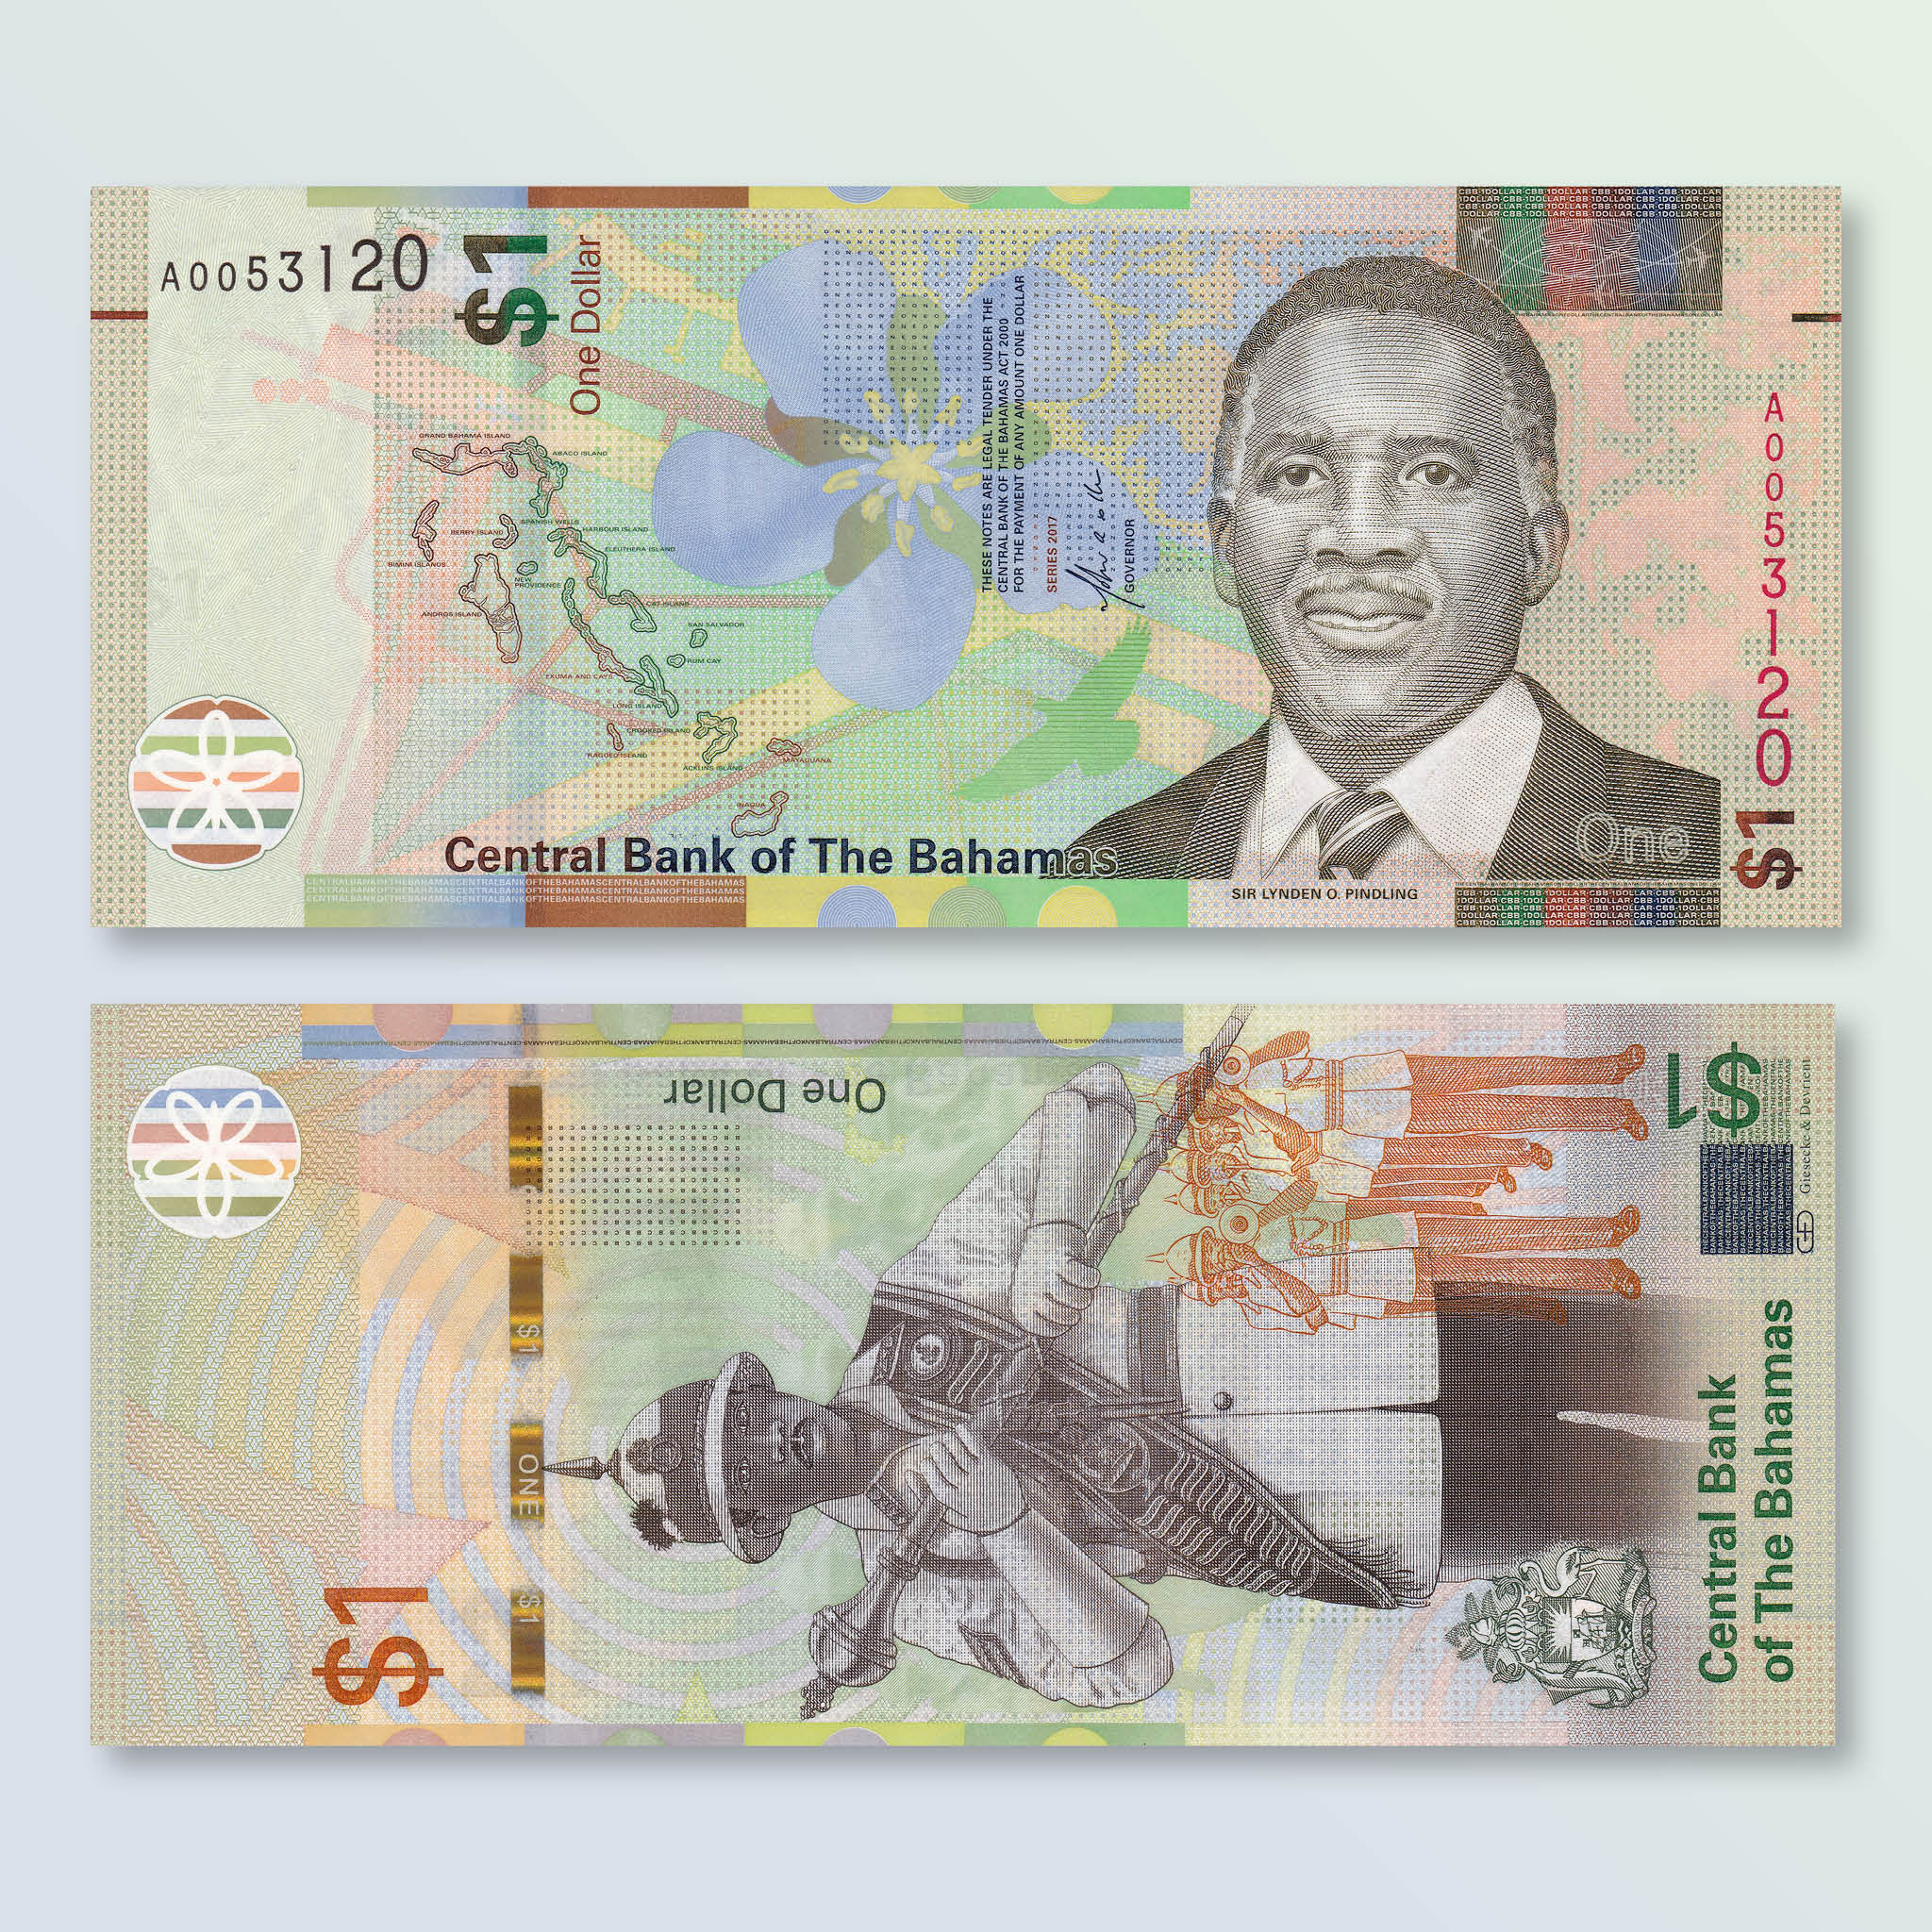 Bahamas 1 Dollar, 2017, B349a, P77a, UNC - Robert's World Money - World Banknotes